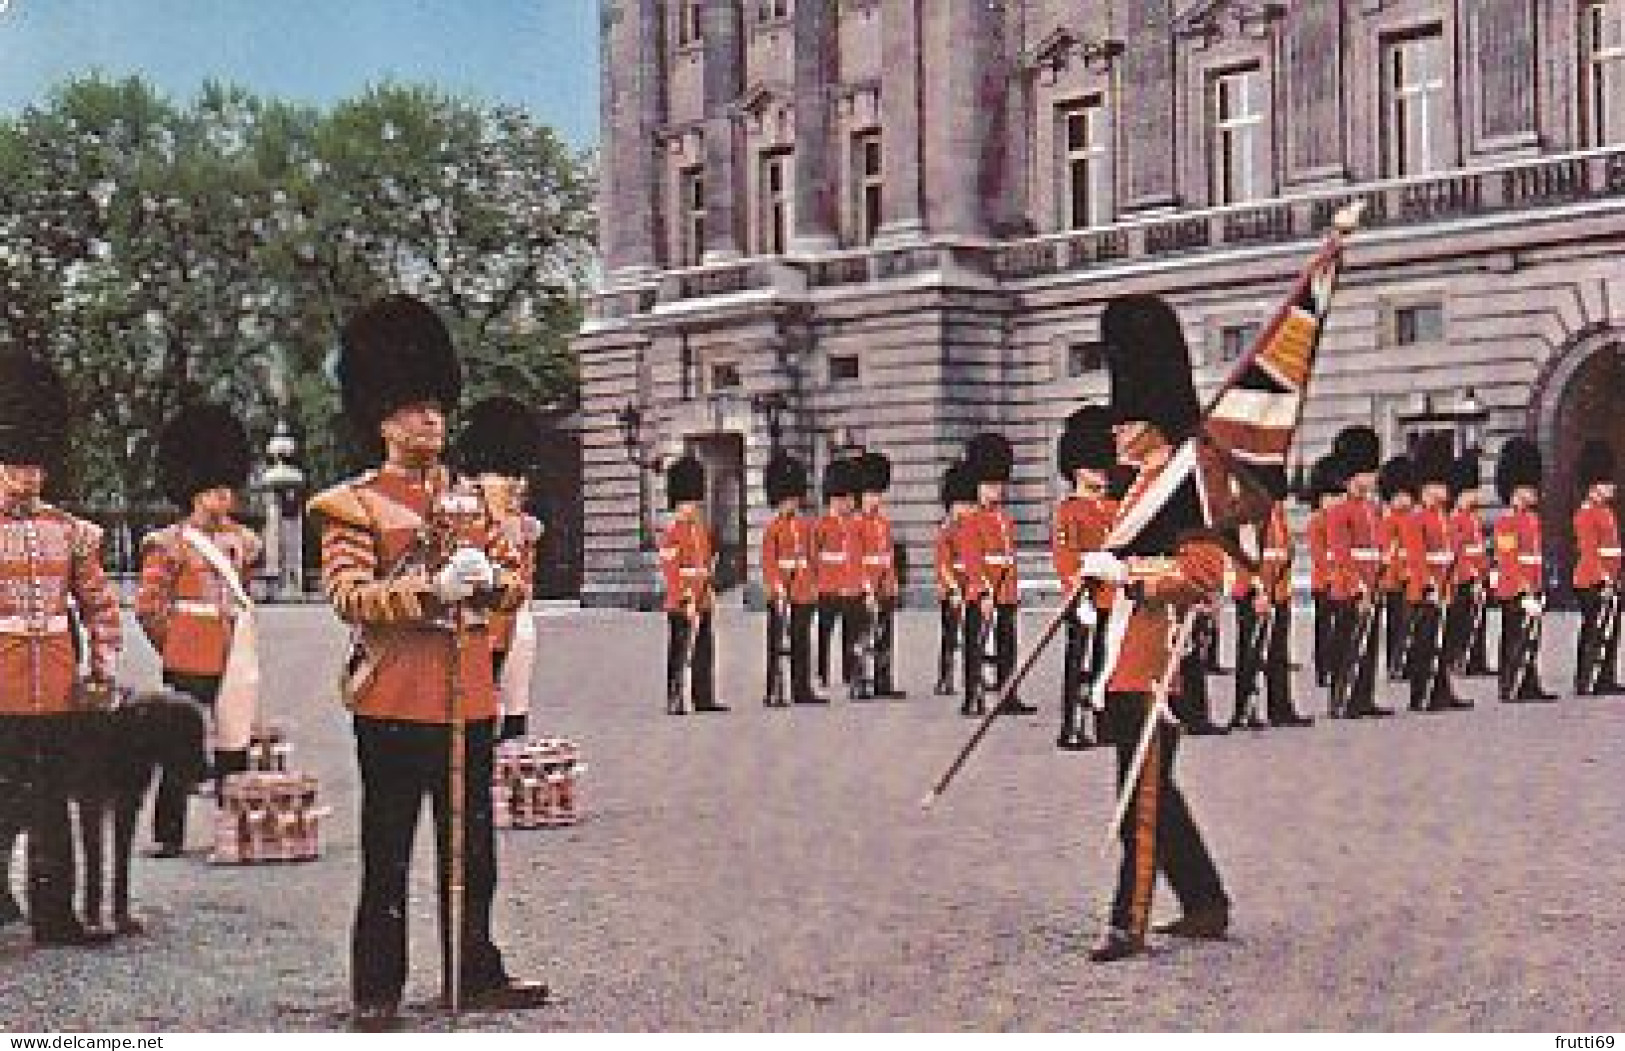 AK 206365 ENGLAND - London - Changing The Guards Ceremony At Buckingham Palace - Buckingham Palace